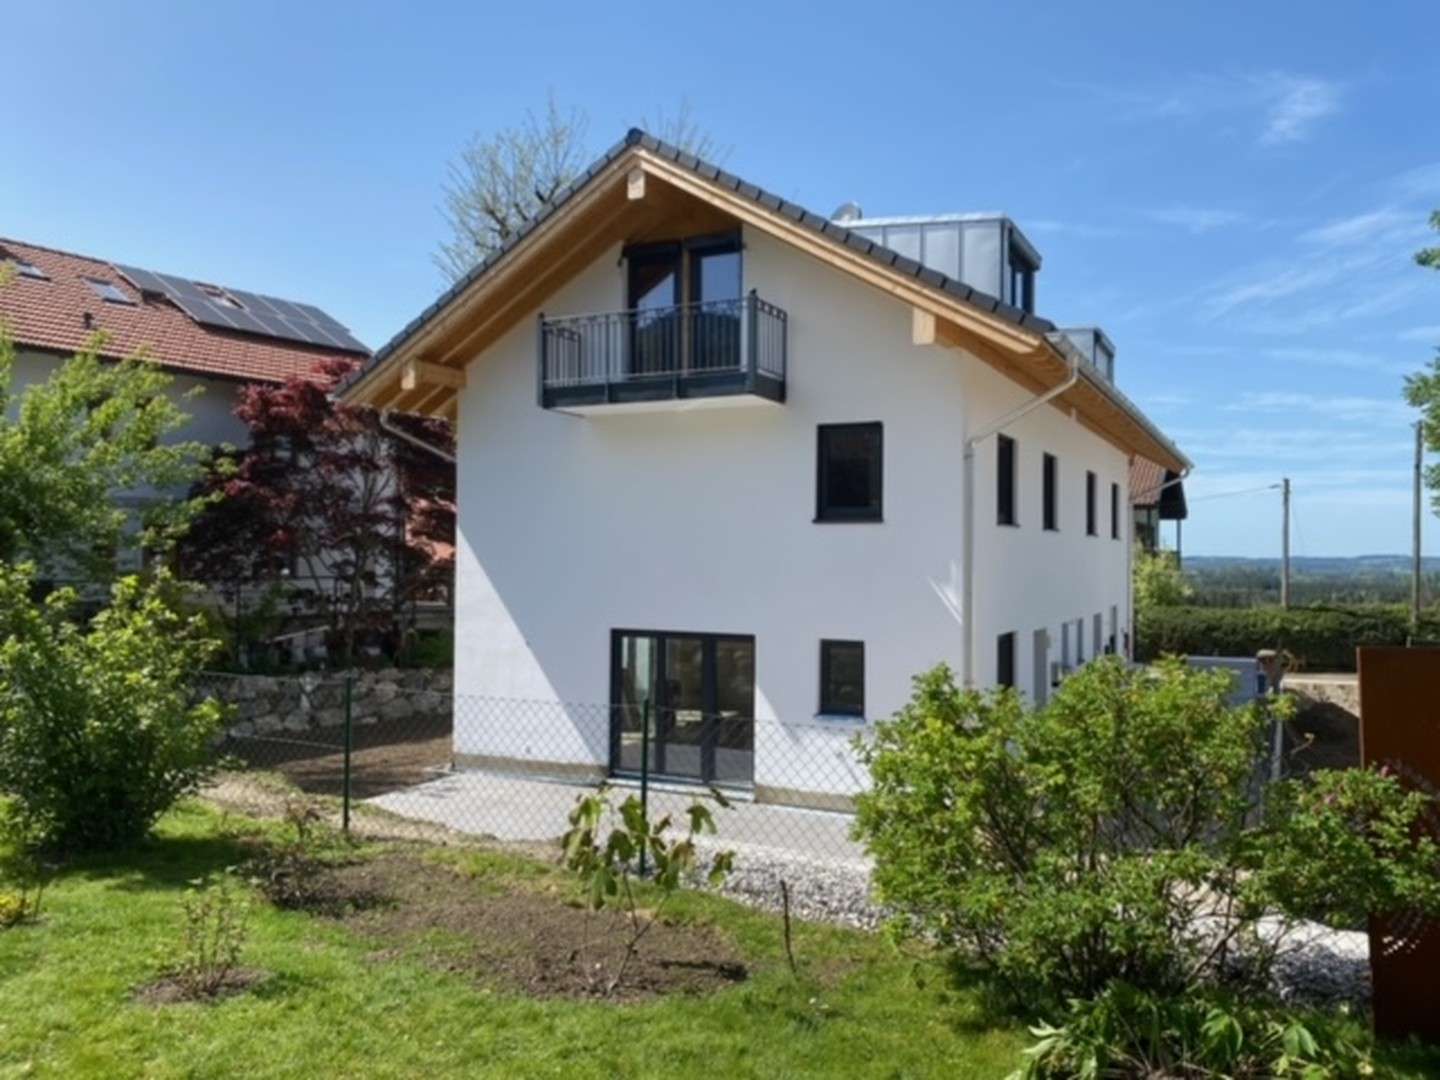 Haus zum Mieten in Bad Heilbrunn 2.700,00 € 142 m²